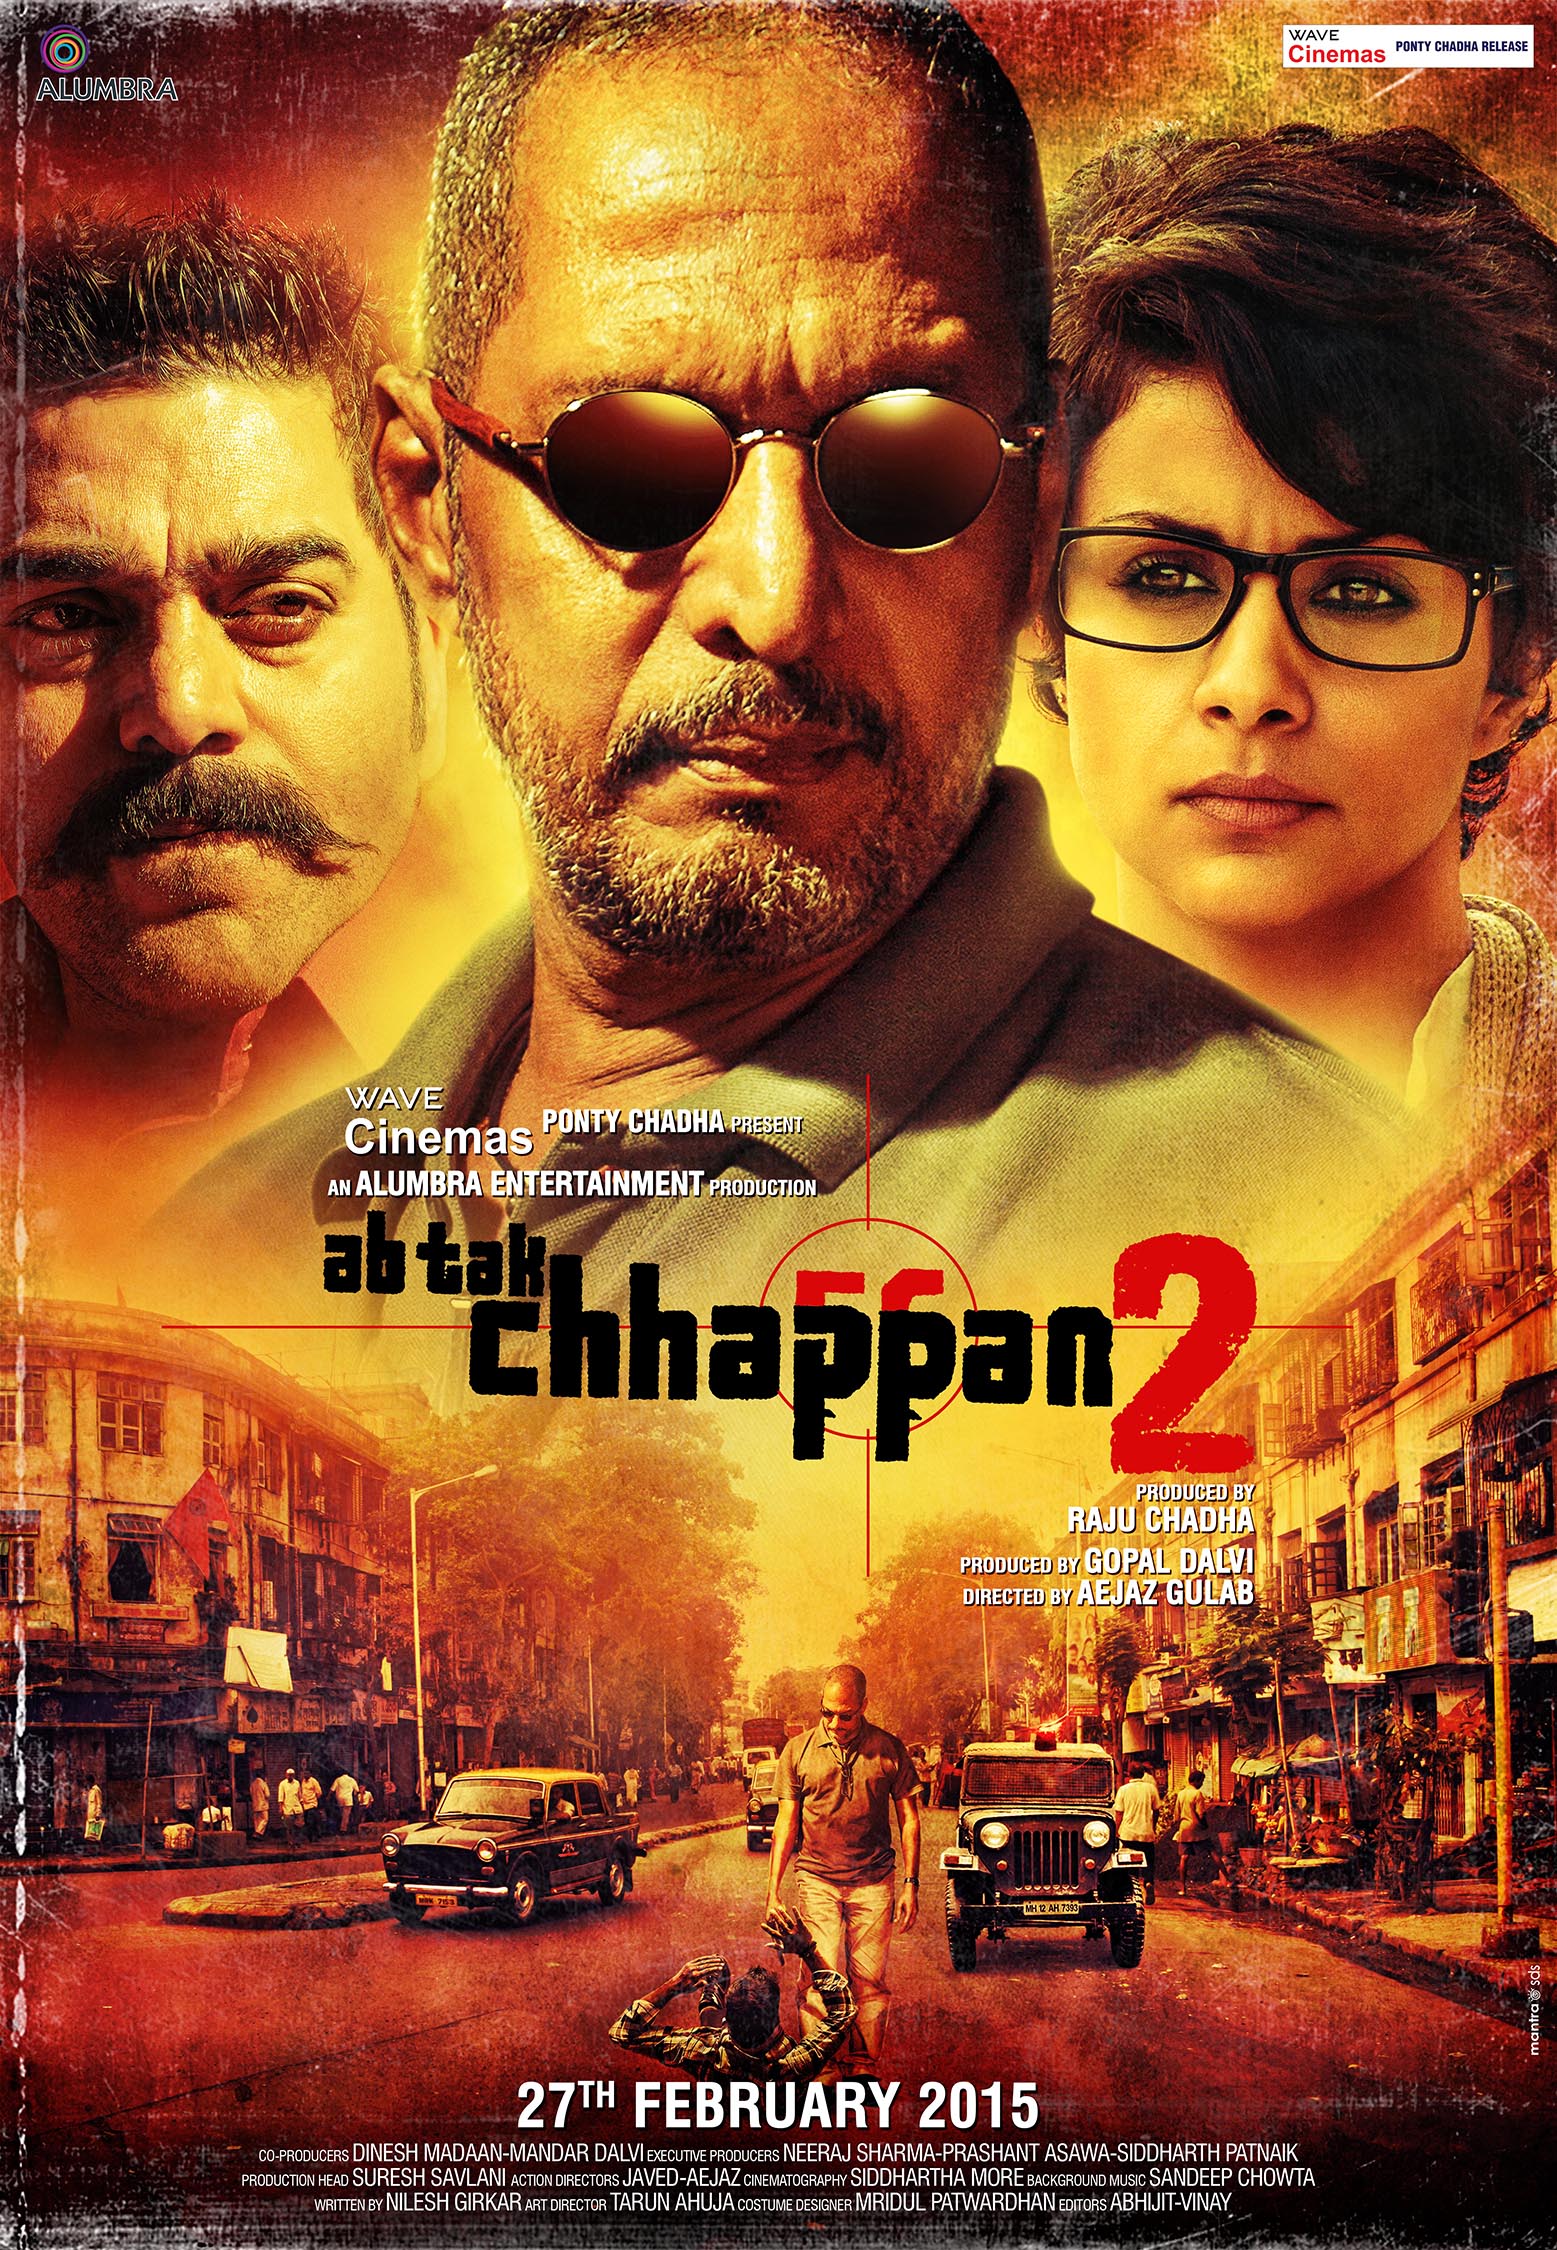 ab-tak-chhappan-2-2015-3051-poster.jpg